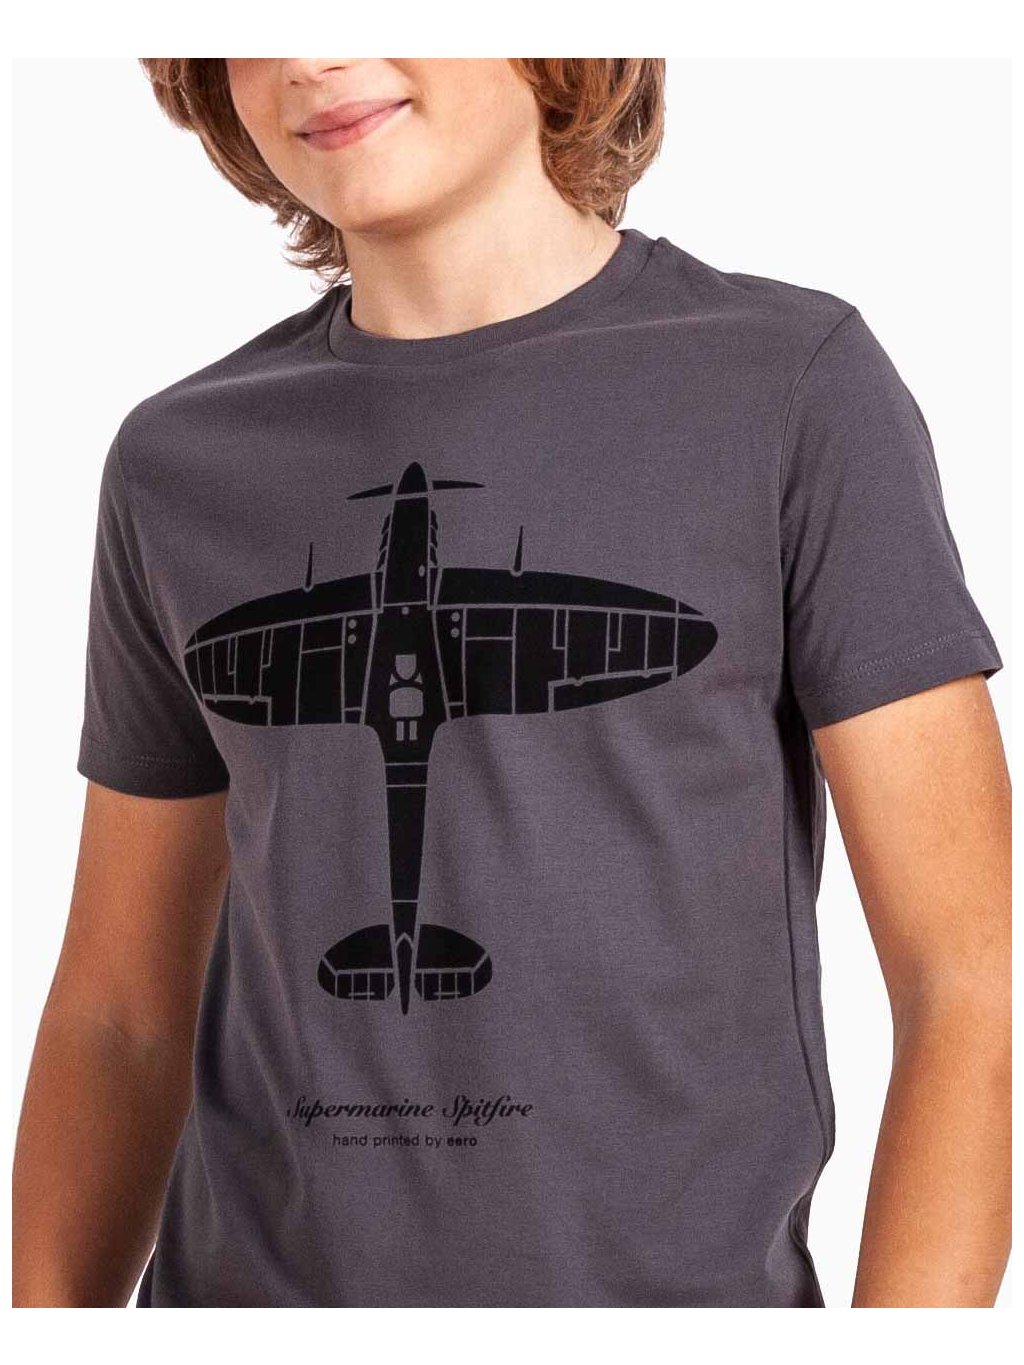 Aviation kids t-shirt - Supermarine Spitfire - EEROPLANE